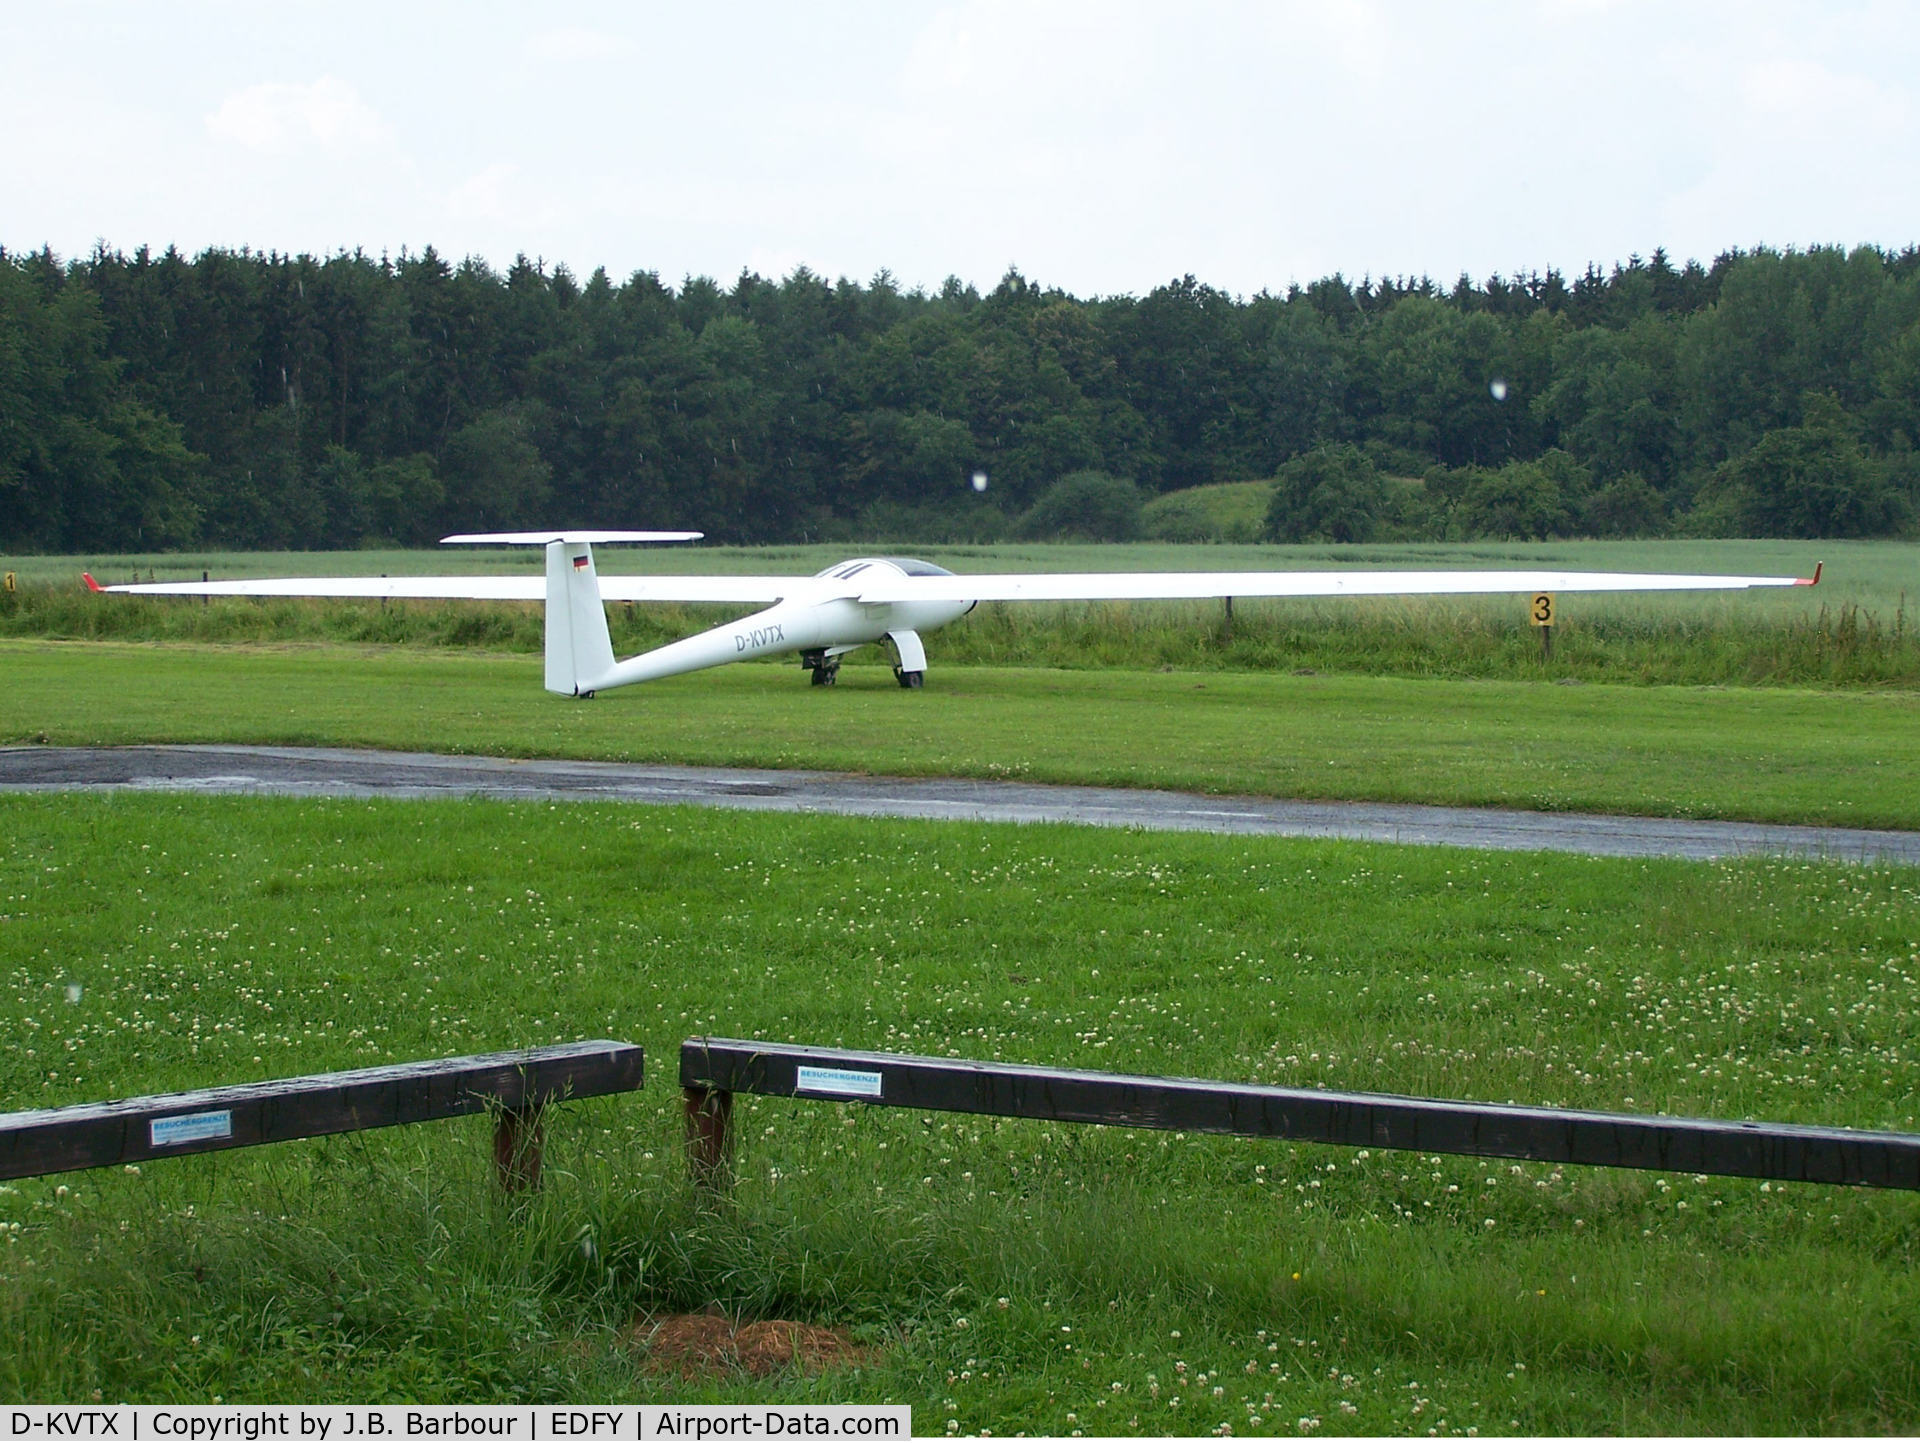 D-KVTX, 2000 Stemme S-10VT C/N 11-043, Elz Flugplatz, Germany